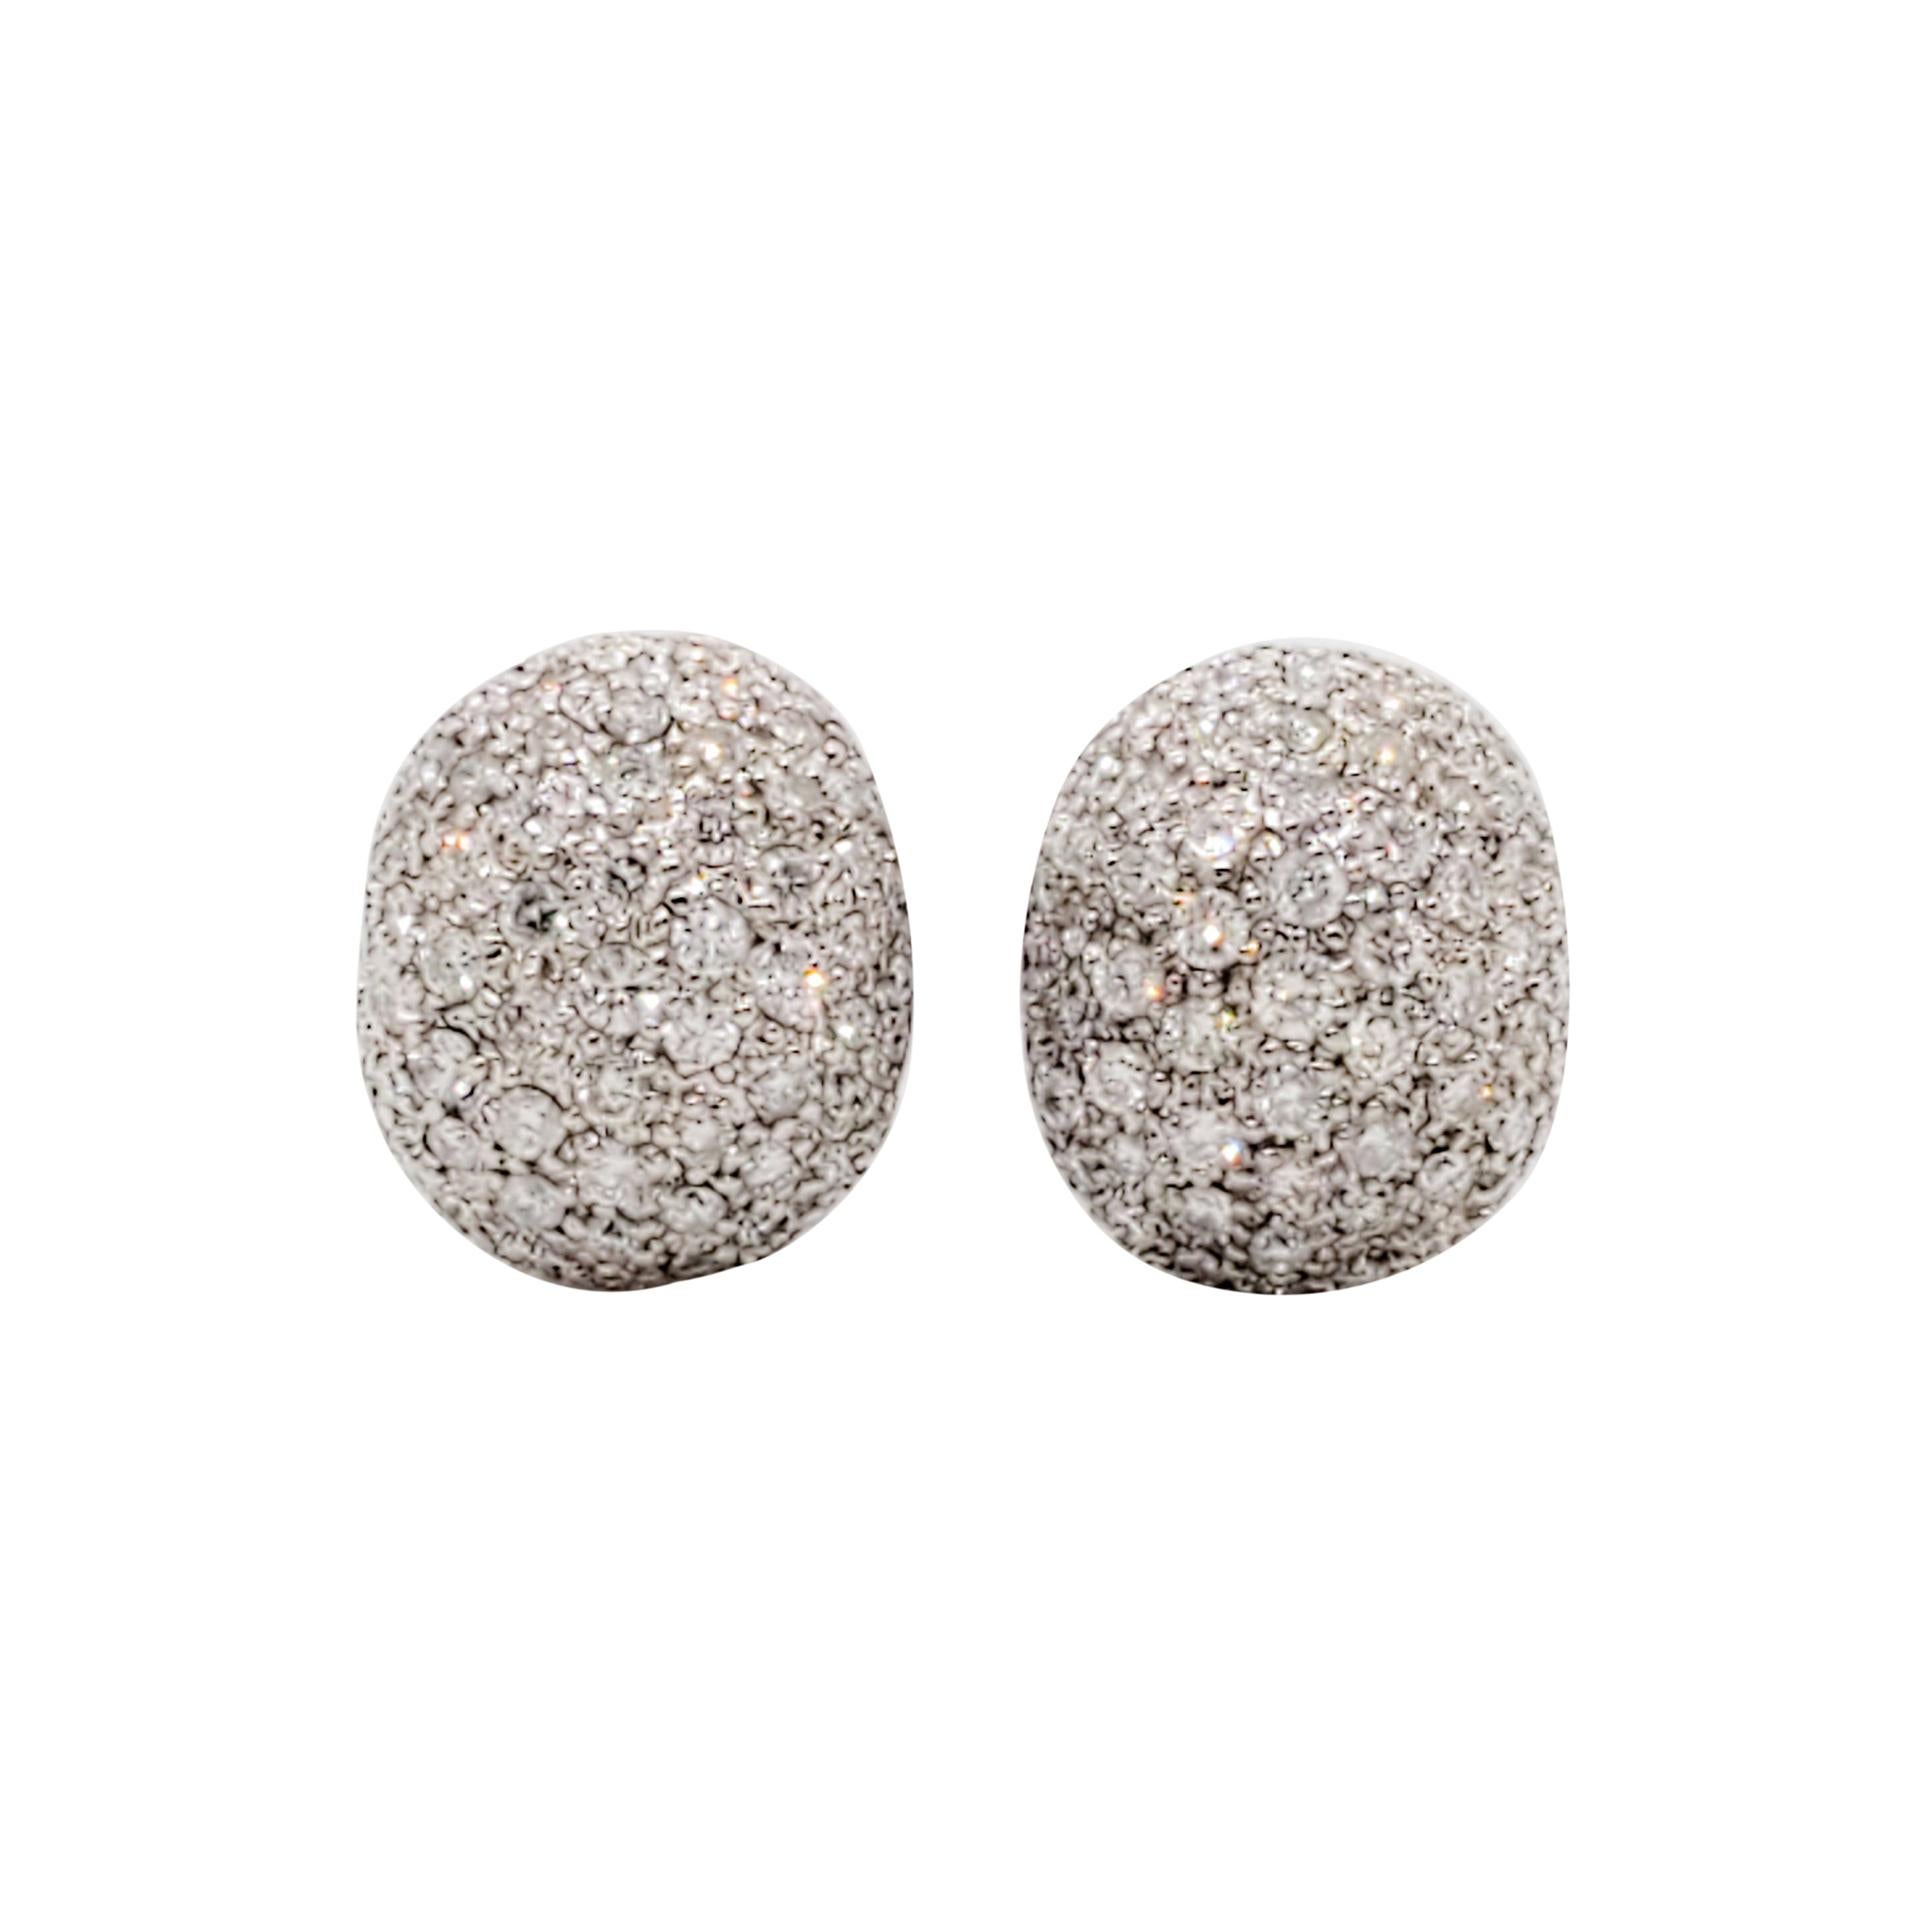 White Diamond Pave Earrings in 18k White Gold